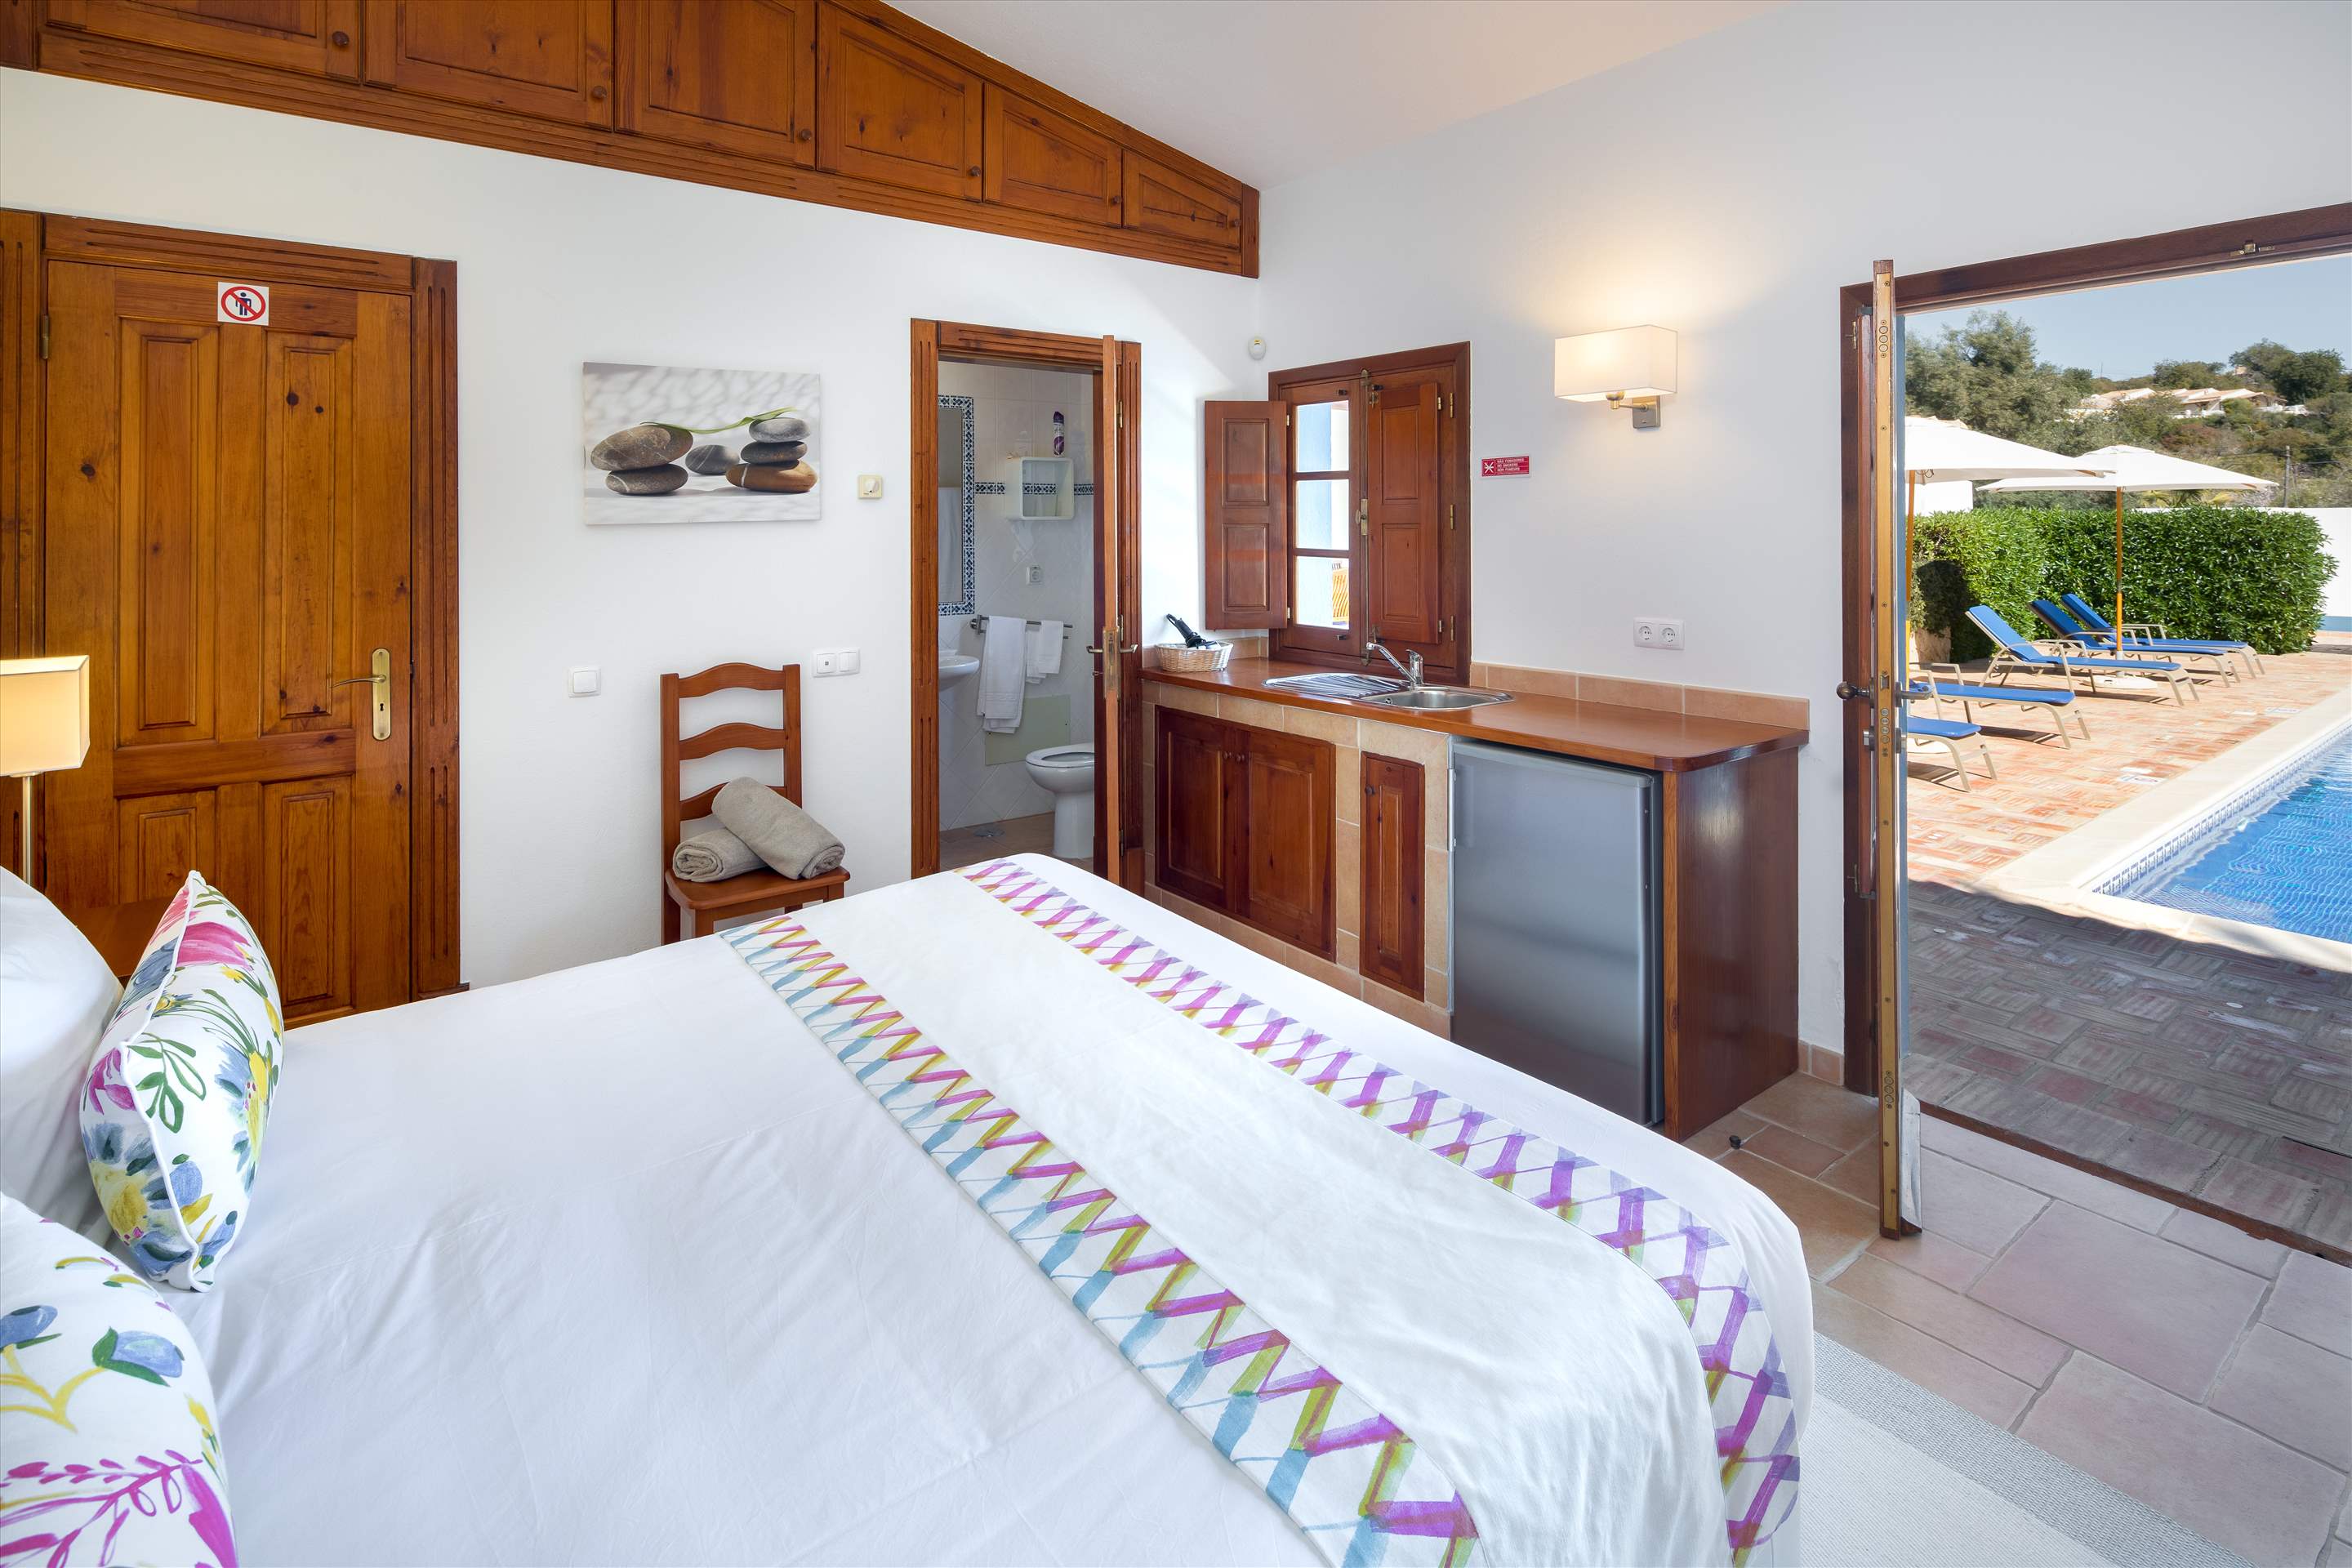 Casa do Ingles, up to 6 persons, 3 bedroom villa in Vilamoura Area, Algarve Photo #15